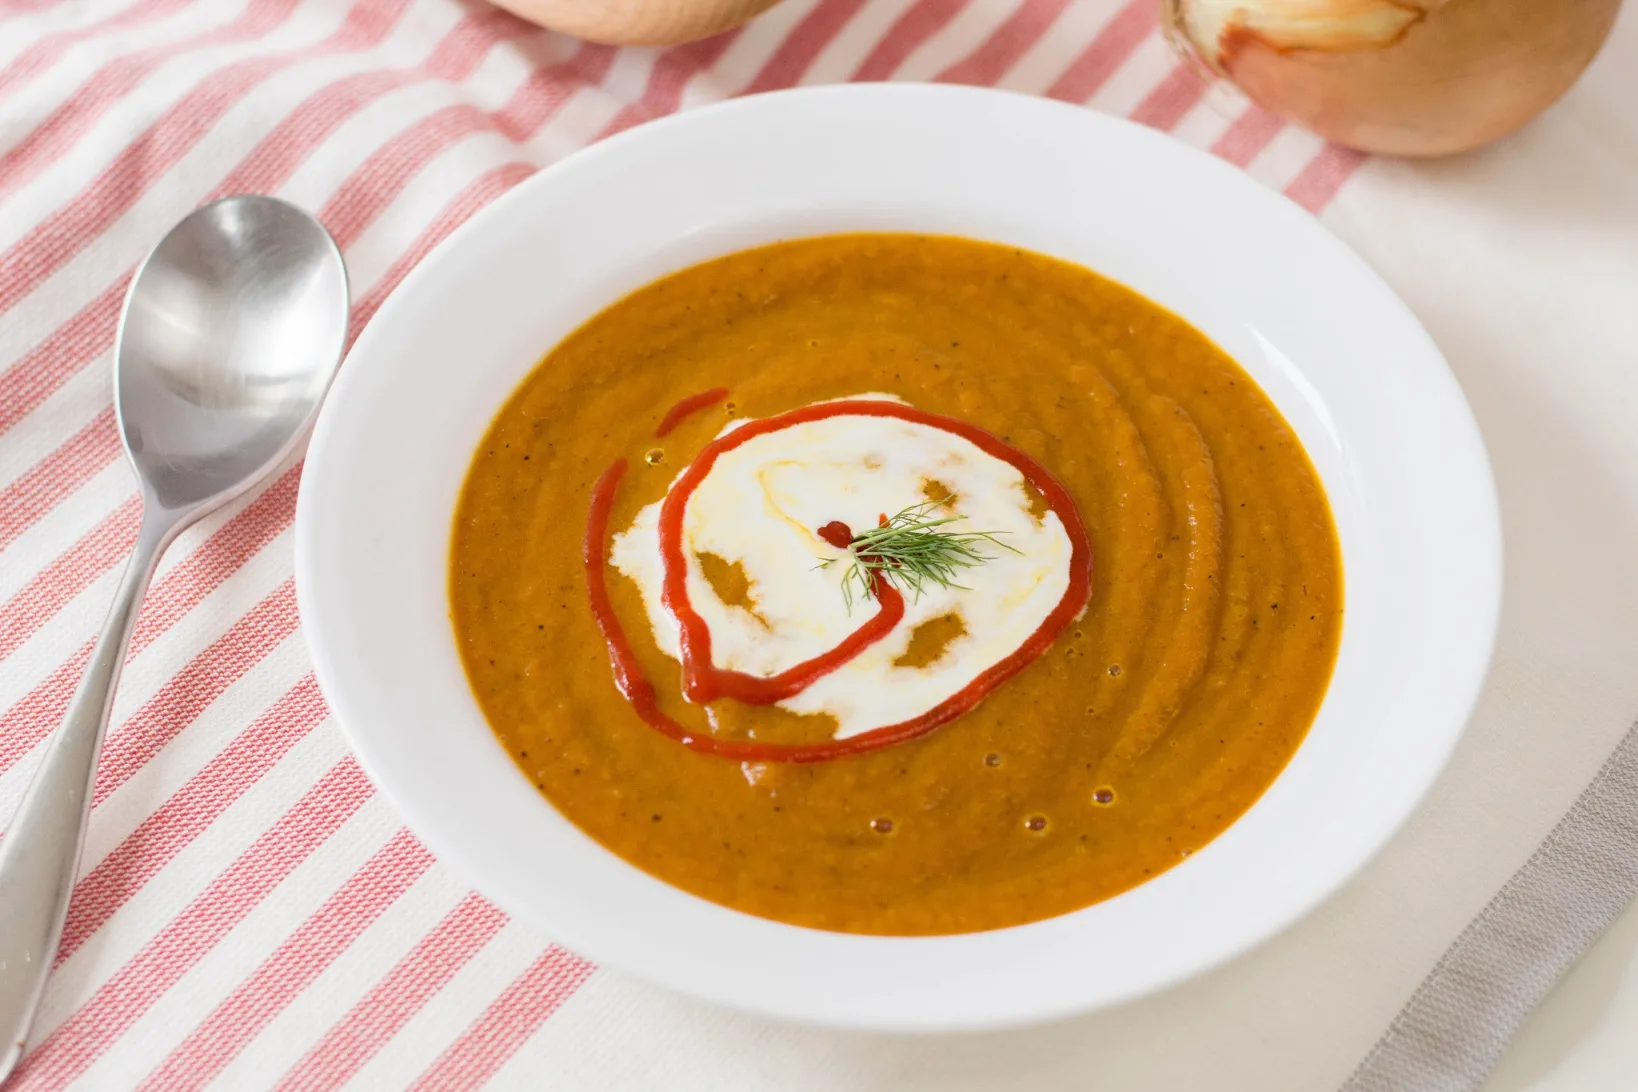 https://merryabouttown.com/wp-content/uploads/2020/07/easy-carrot-soup-recipe.jpg.webp